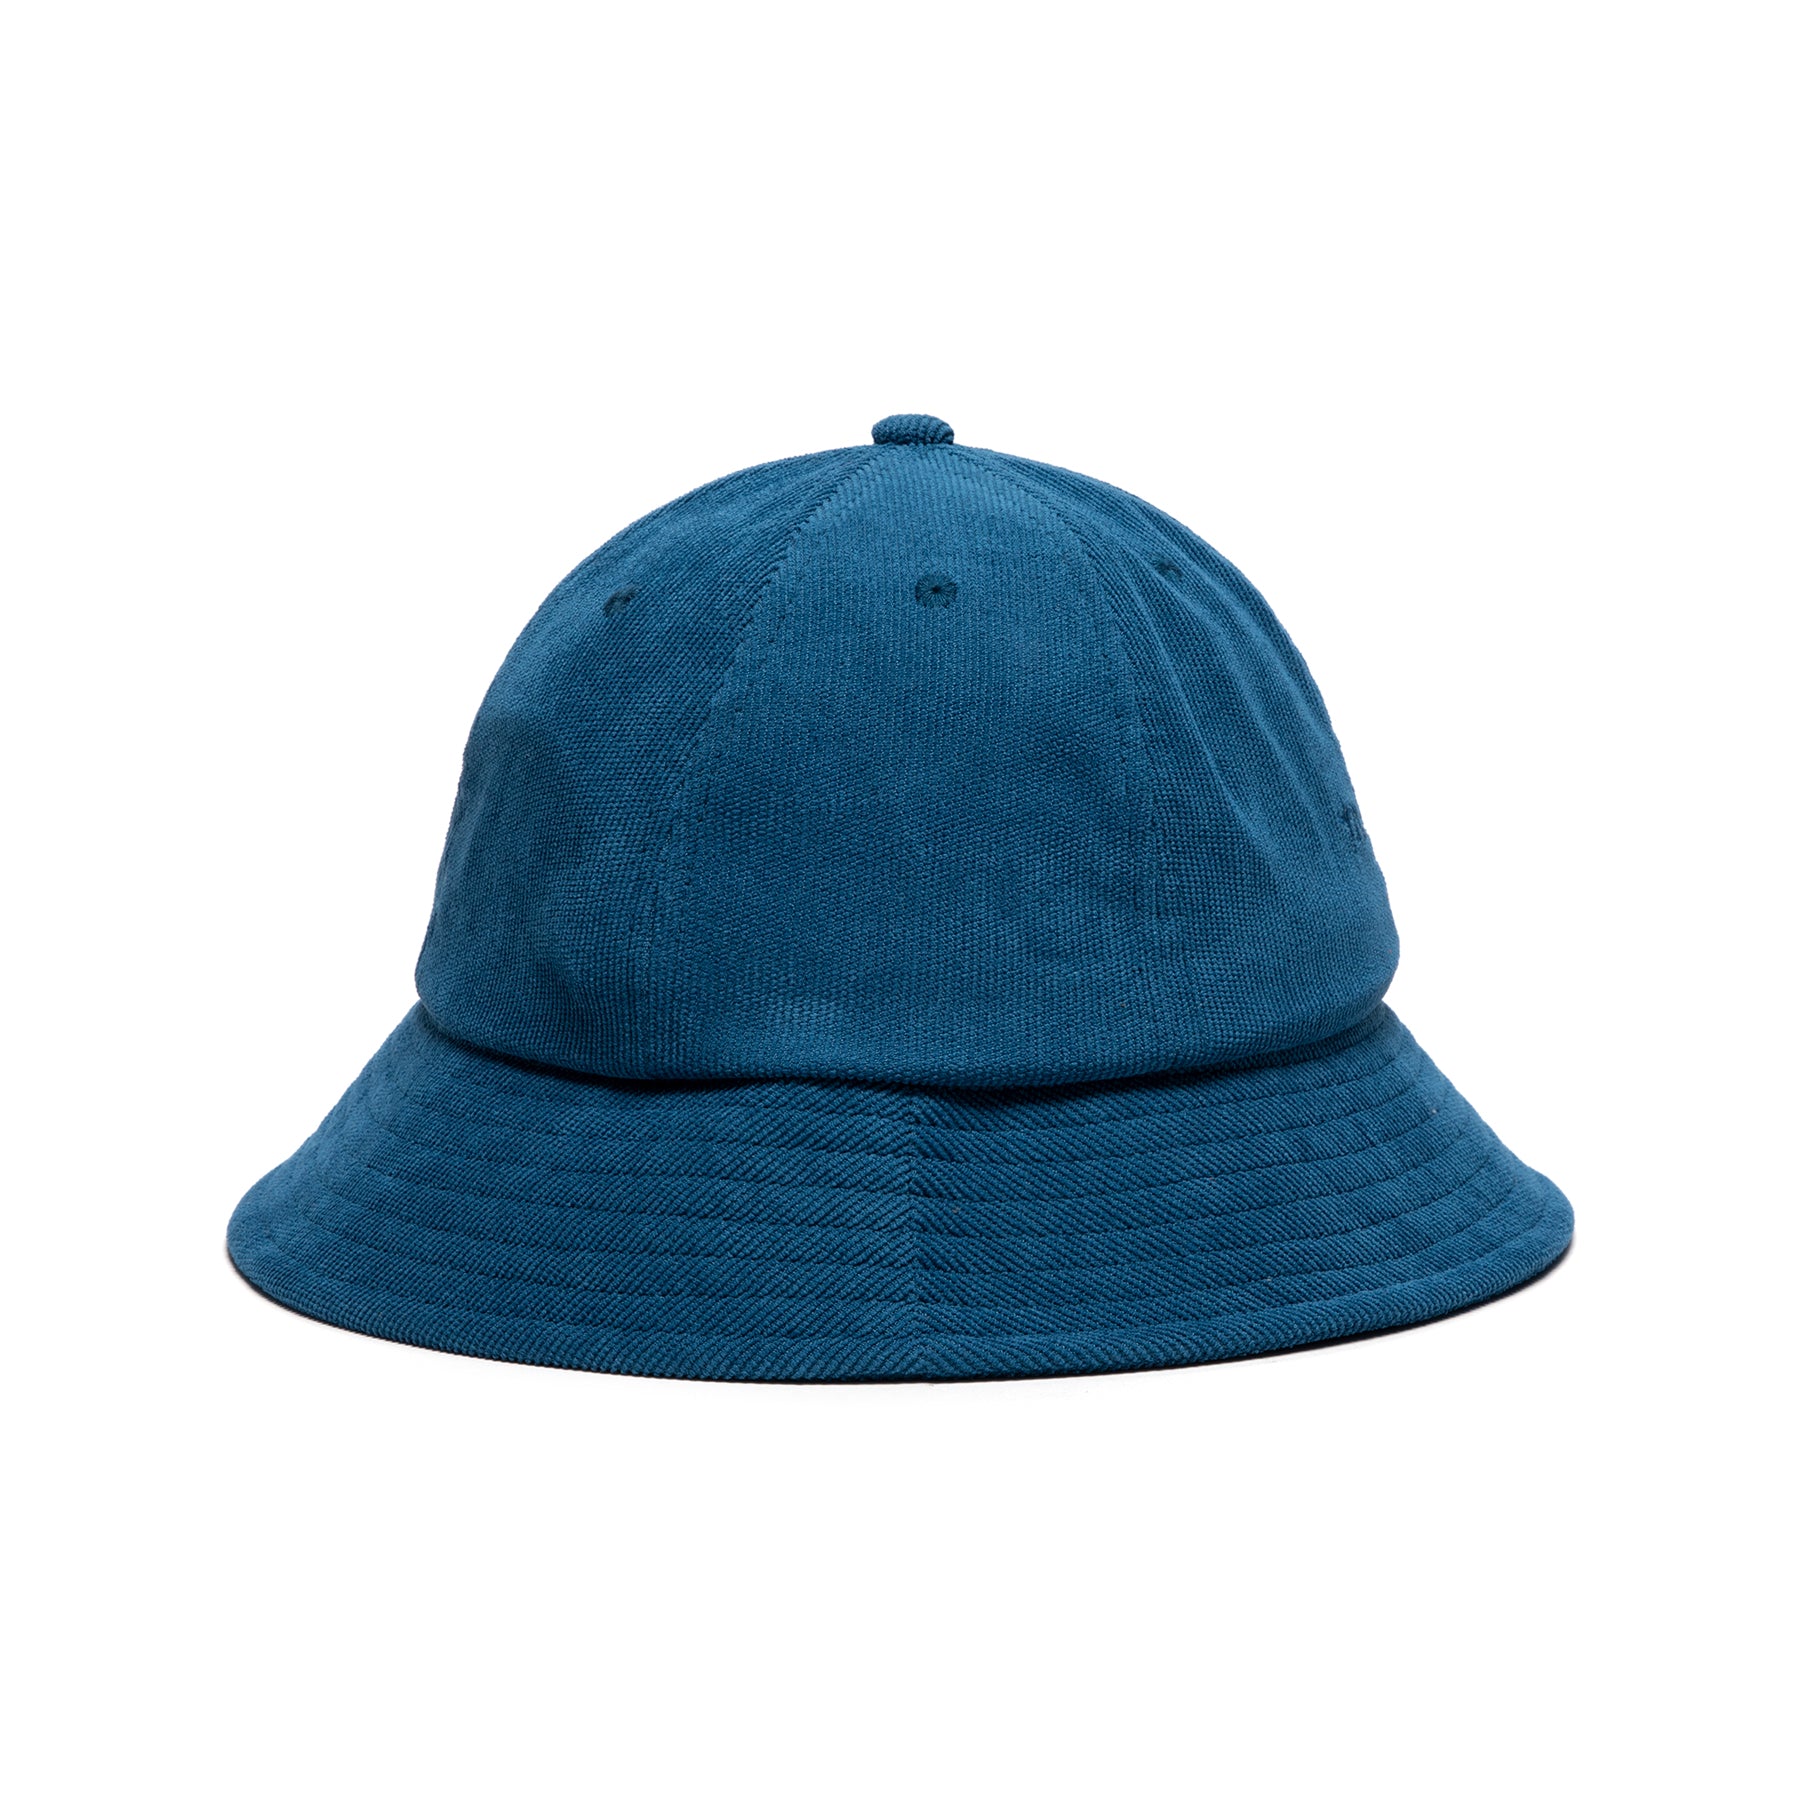 (Blue) Corduroy – Hat Concepts Bucket Mifland